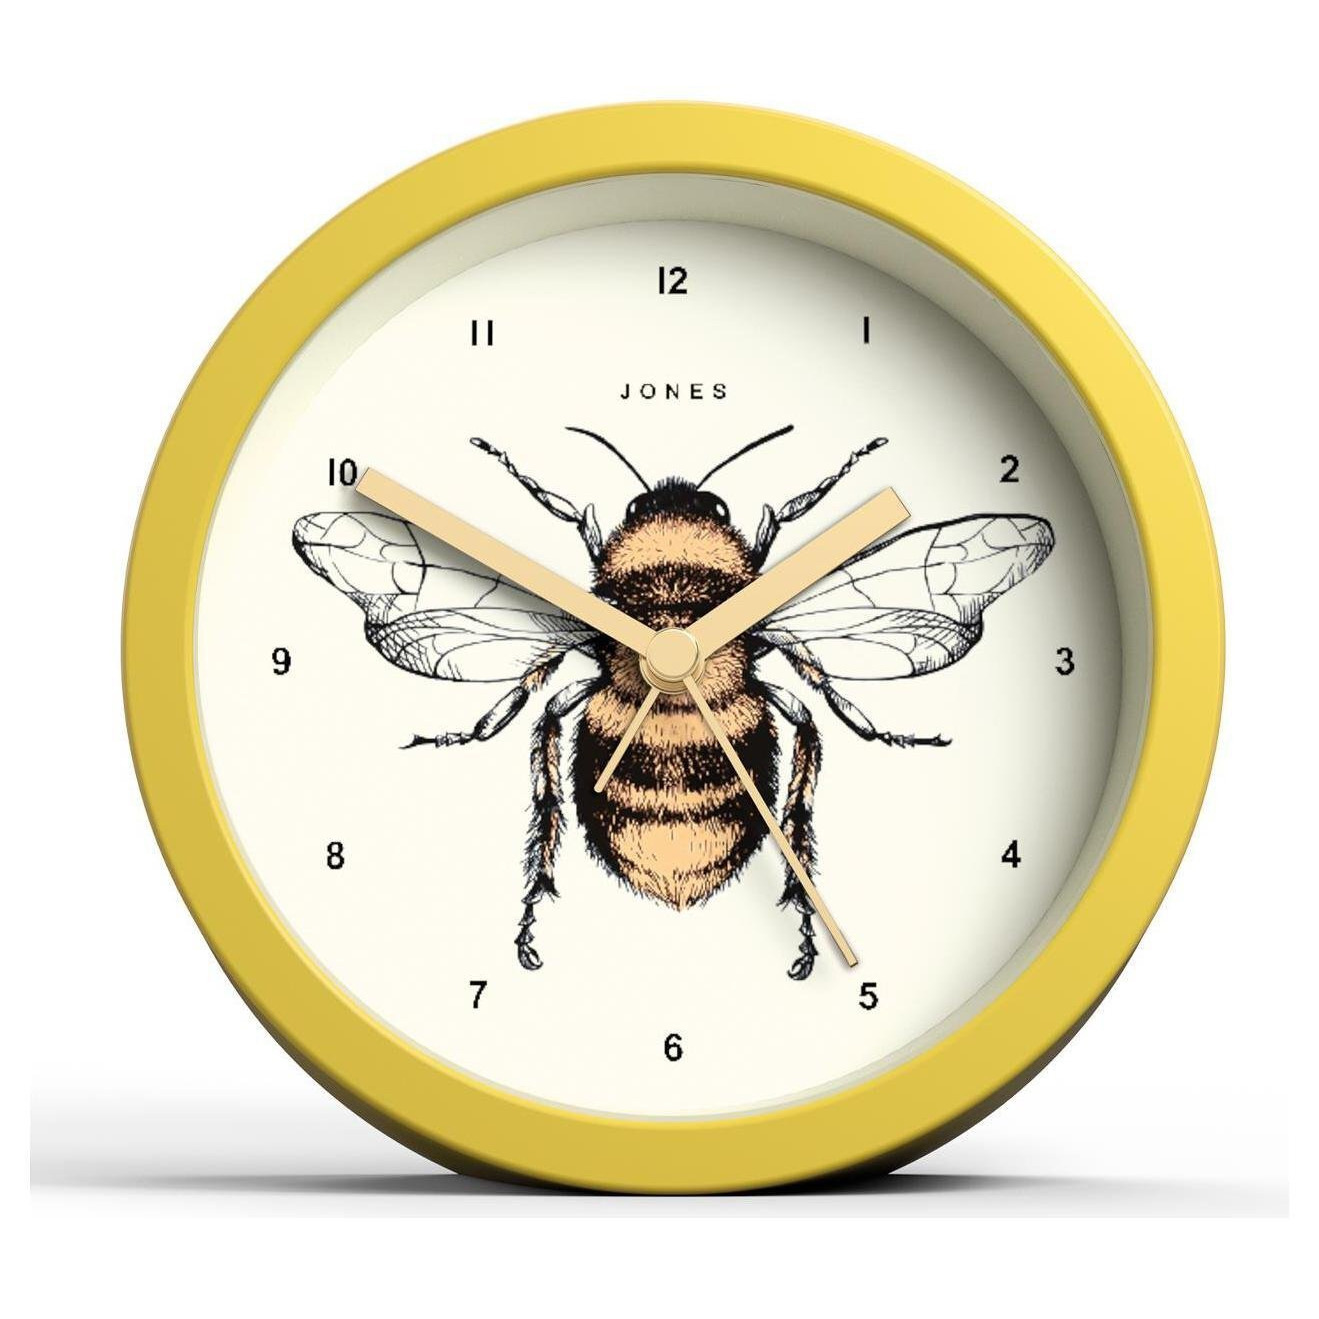 Jones Clocks Analogue Eclipse Bee Alarm Clock - Yellow - image 1